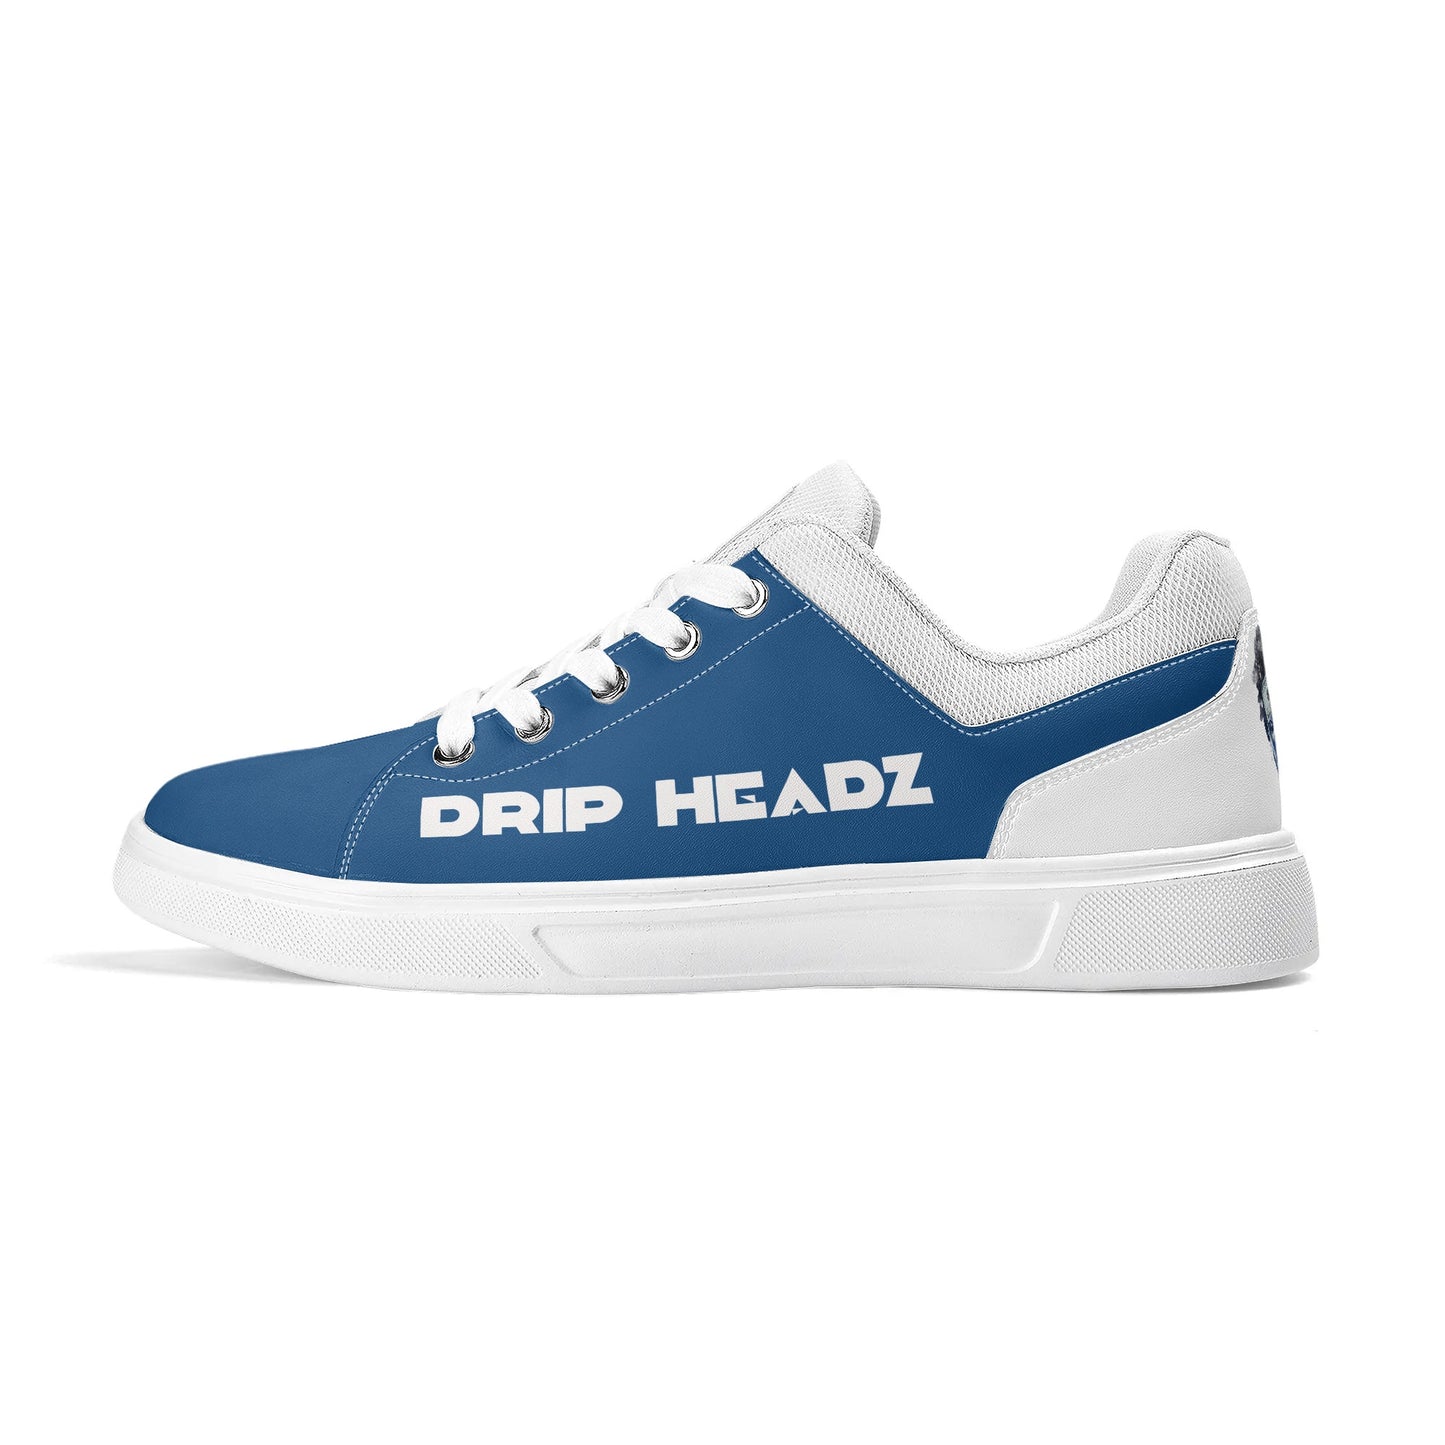 DRIP HEADZ (Unisex Low Top  Skateboard Shoes)